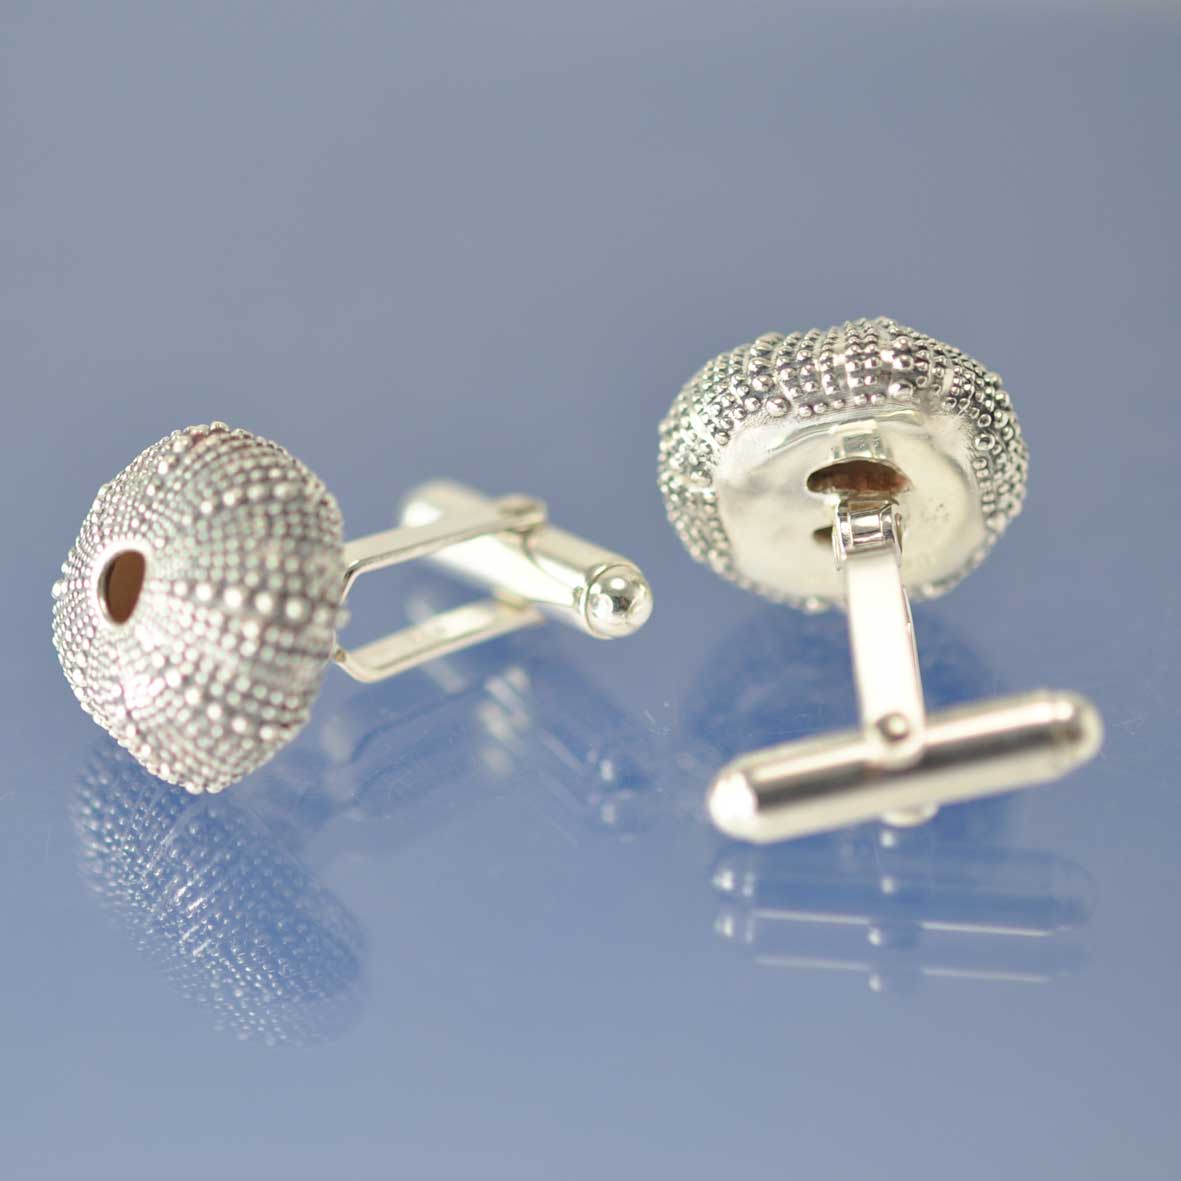 Sea Urchin Cufflinks Cufflinks by Chris Parry Jewellery